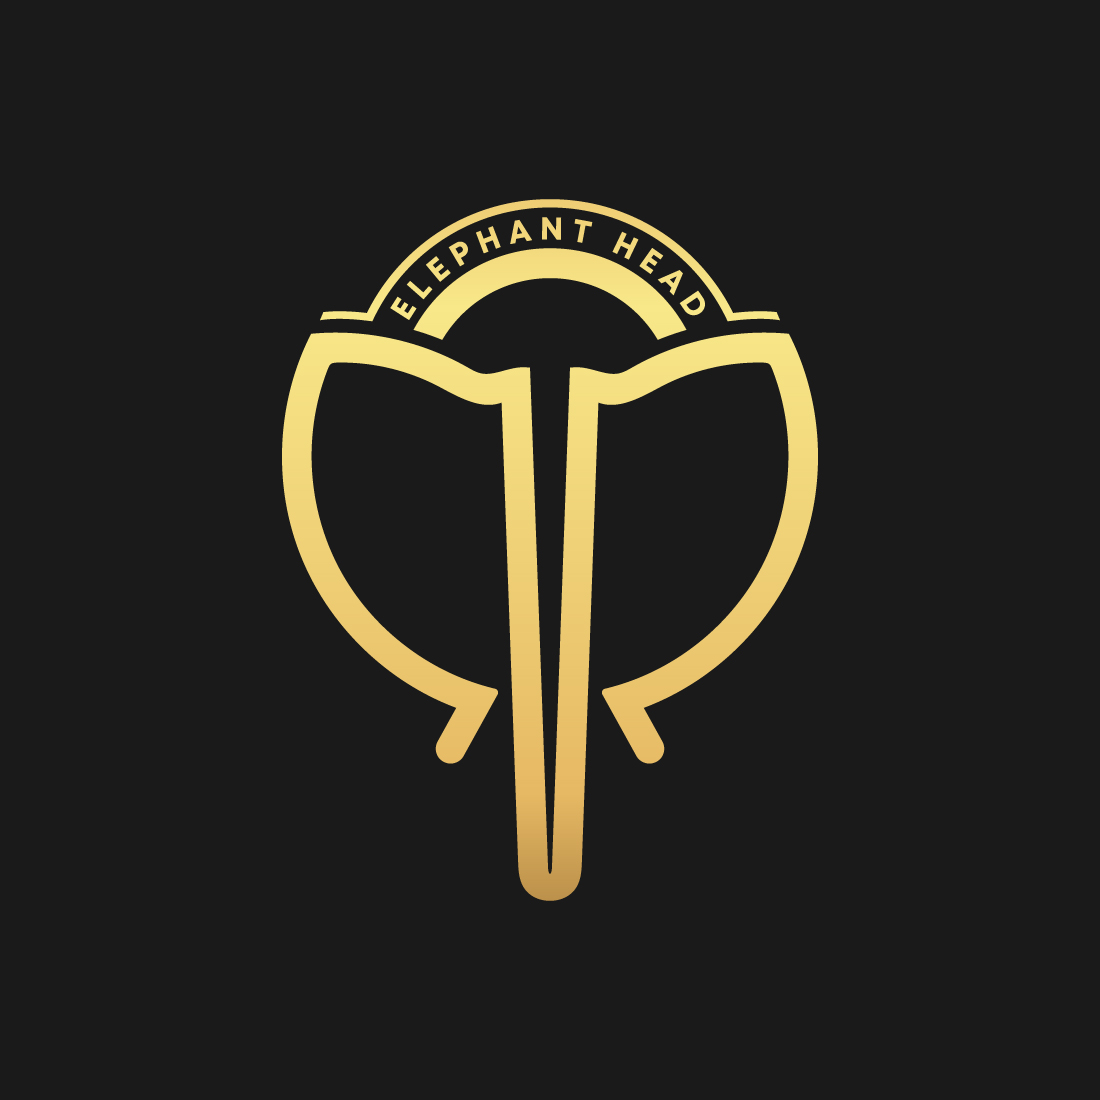 Elephant Head Luxury logo design cover image.